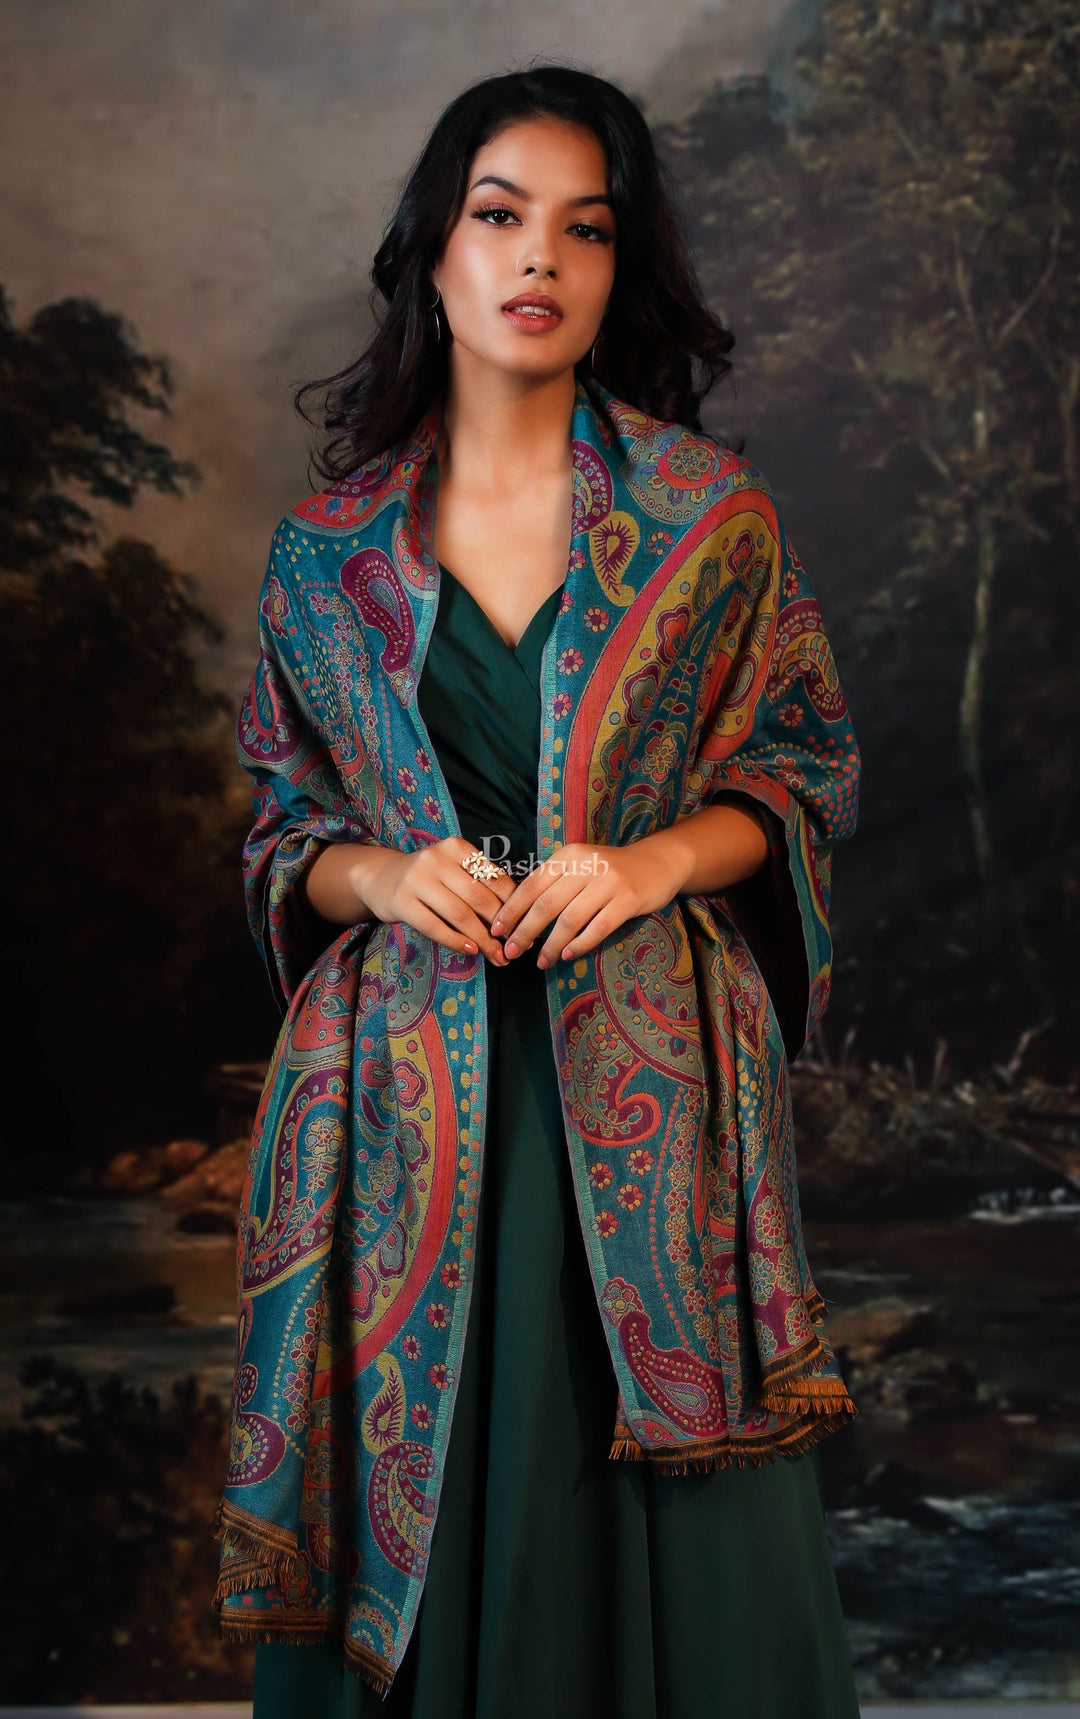 Pashtush India Womens Stoles and Scarves Scarf Pashtush womens Faux Pashmina stole, paisley weave design, Multicolour